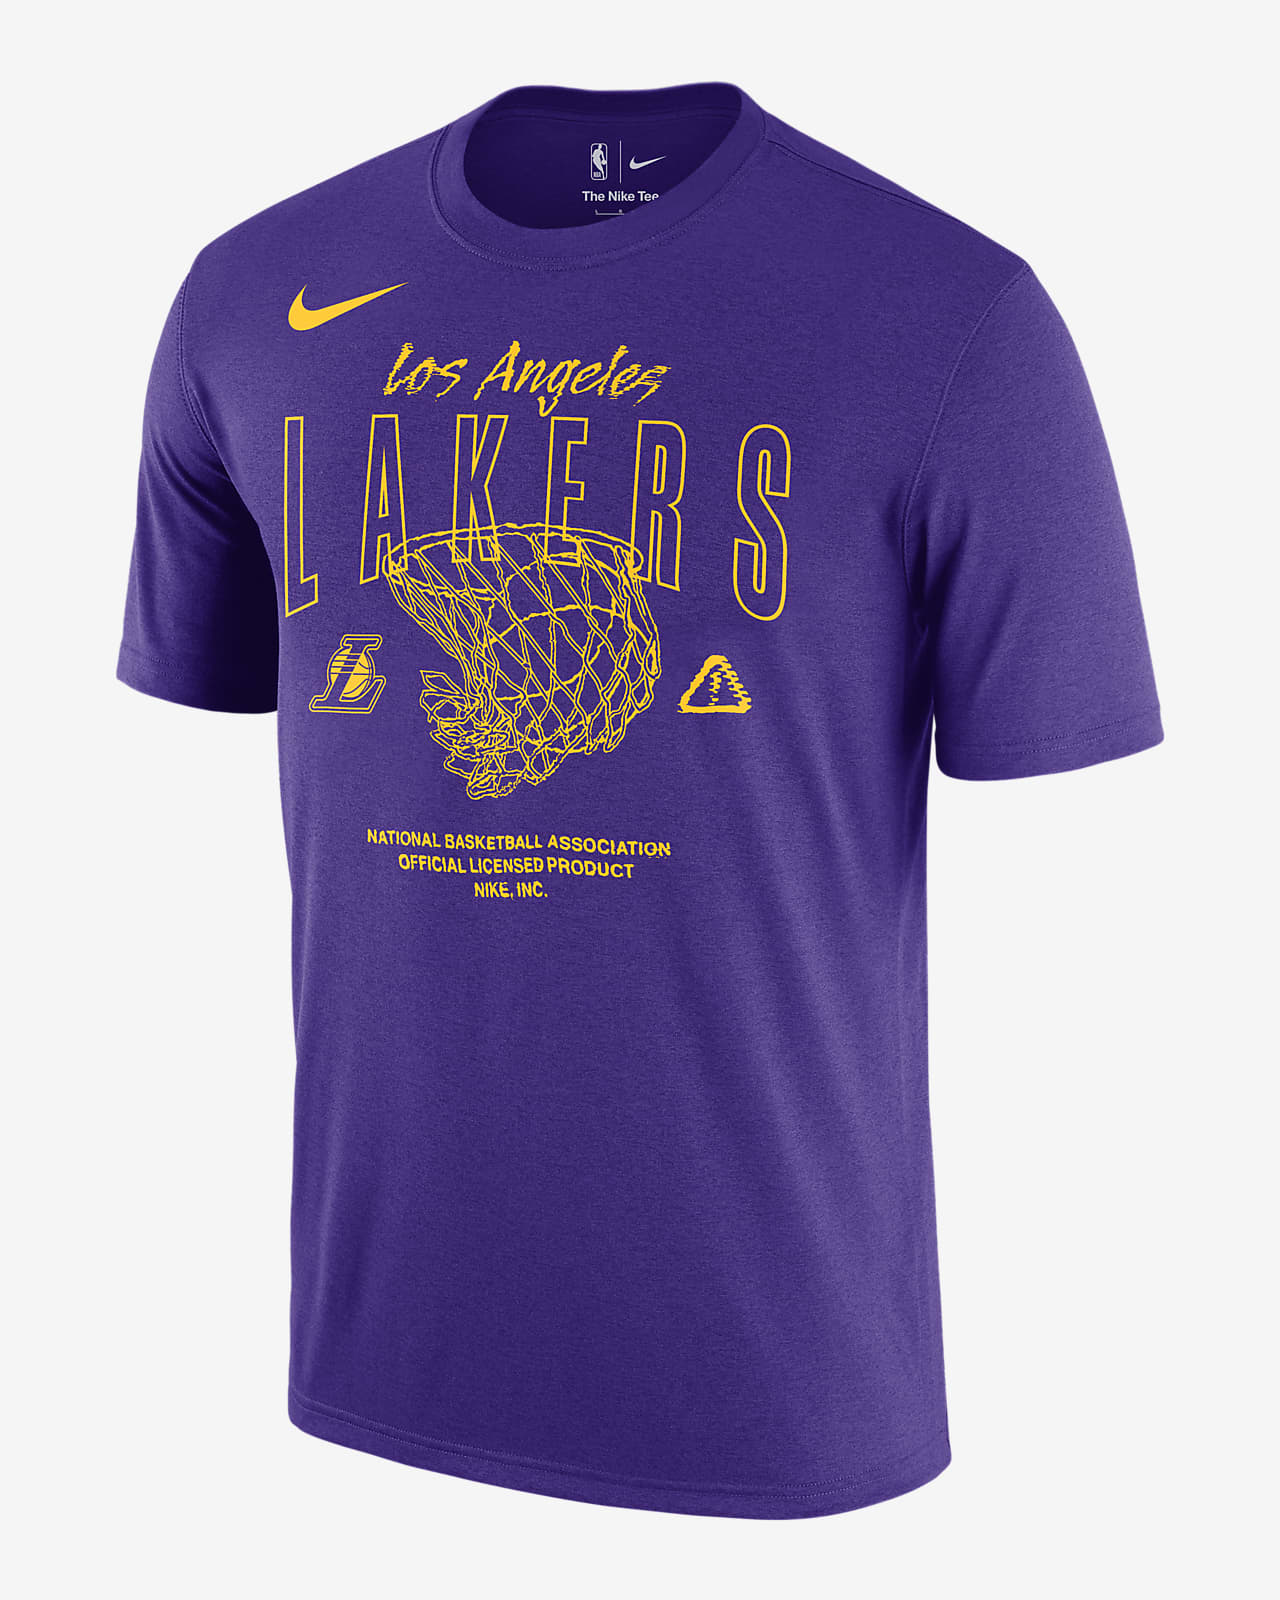 Playera Nike de la NBA para hombre Los Angeles Lakers Courtside MAx90